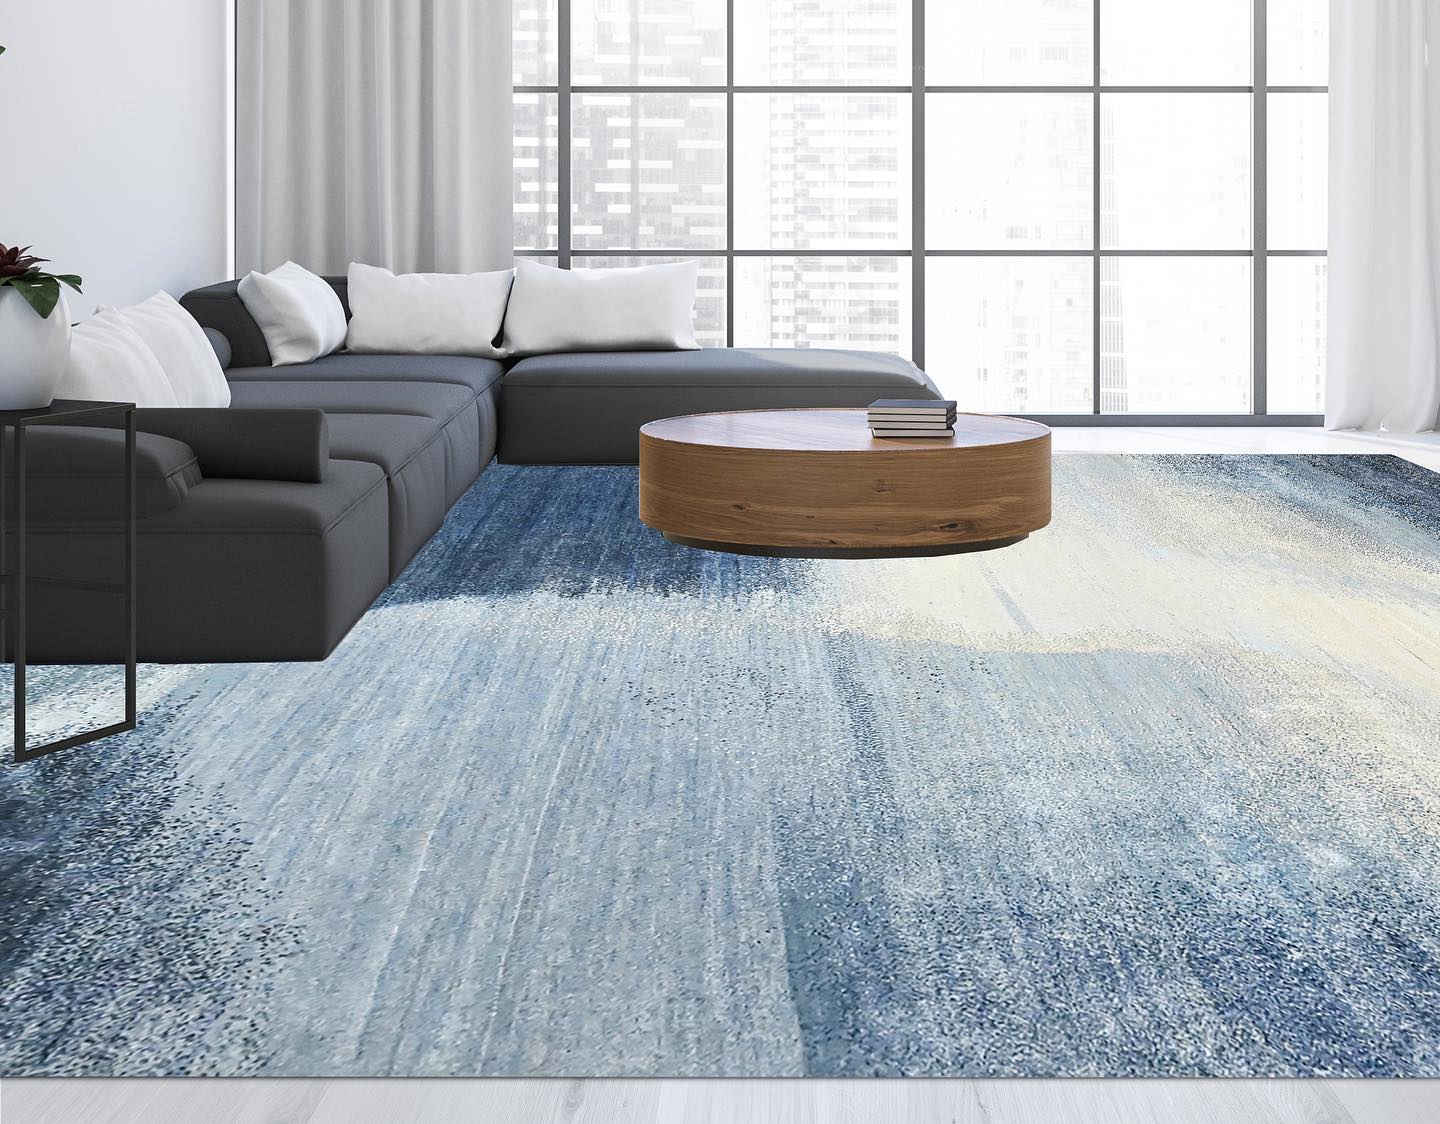 Contemporary living room featuring a blue rug.